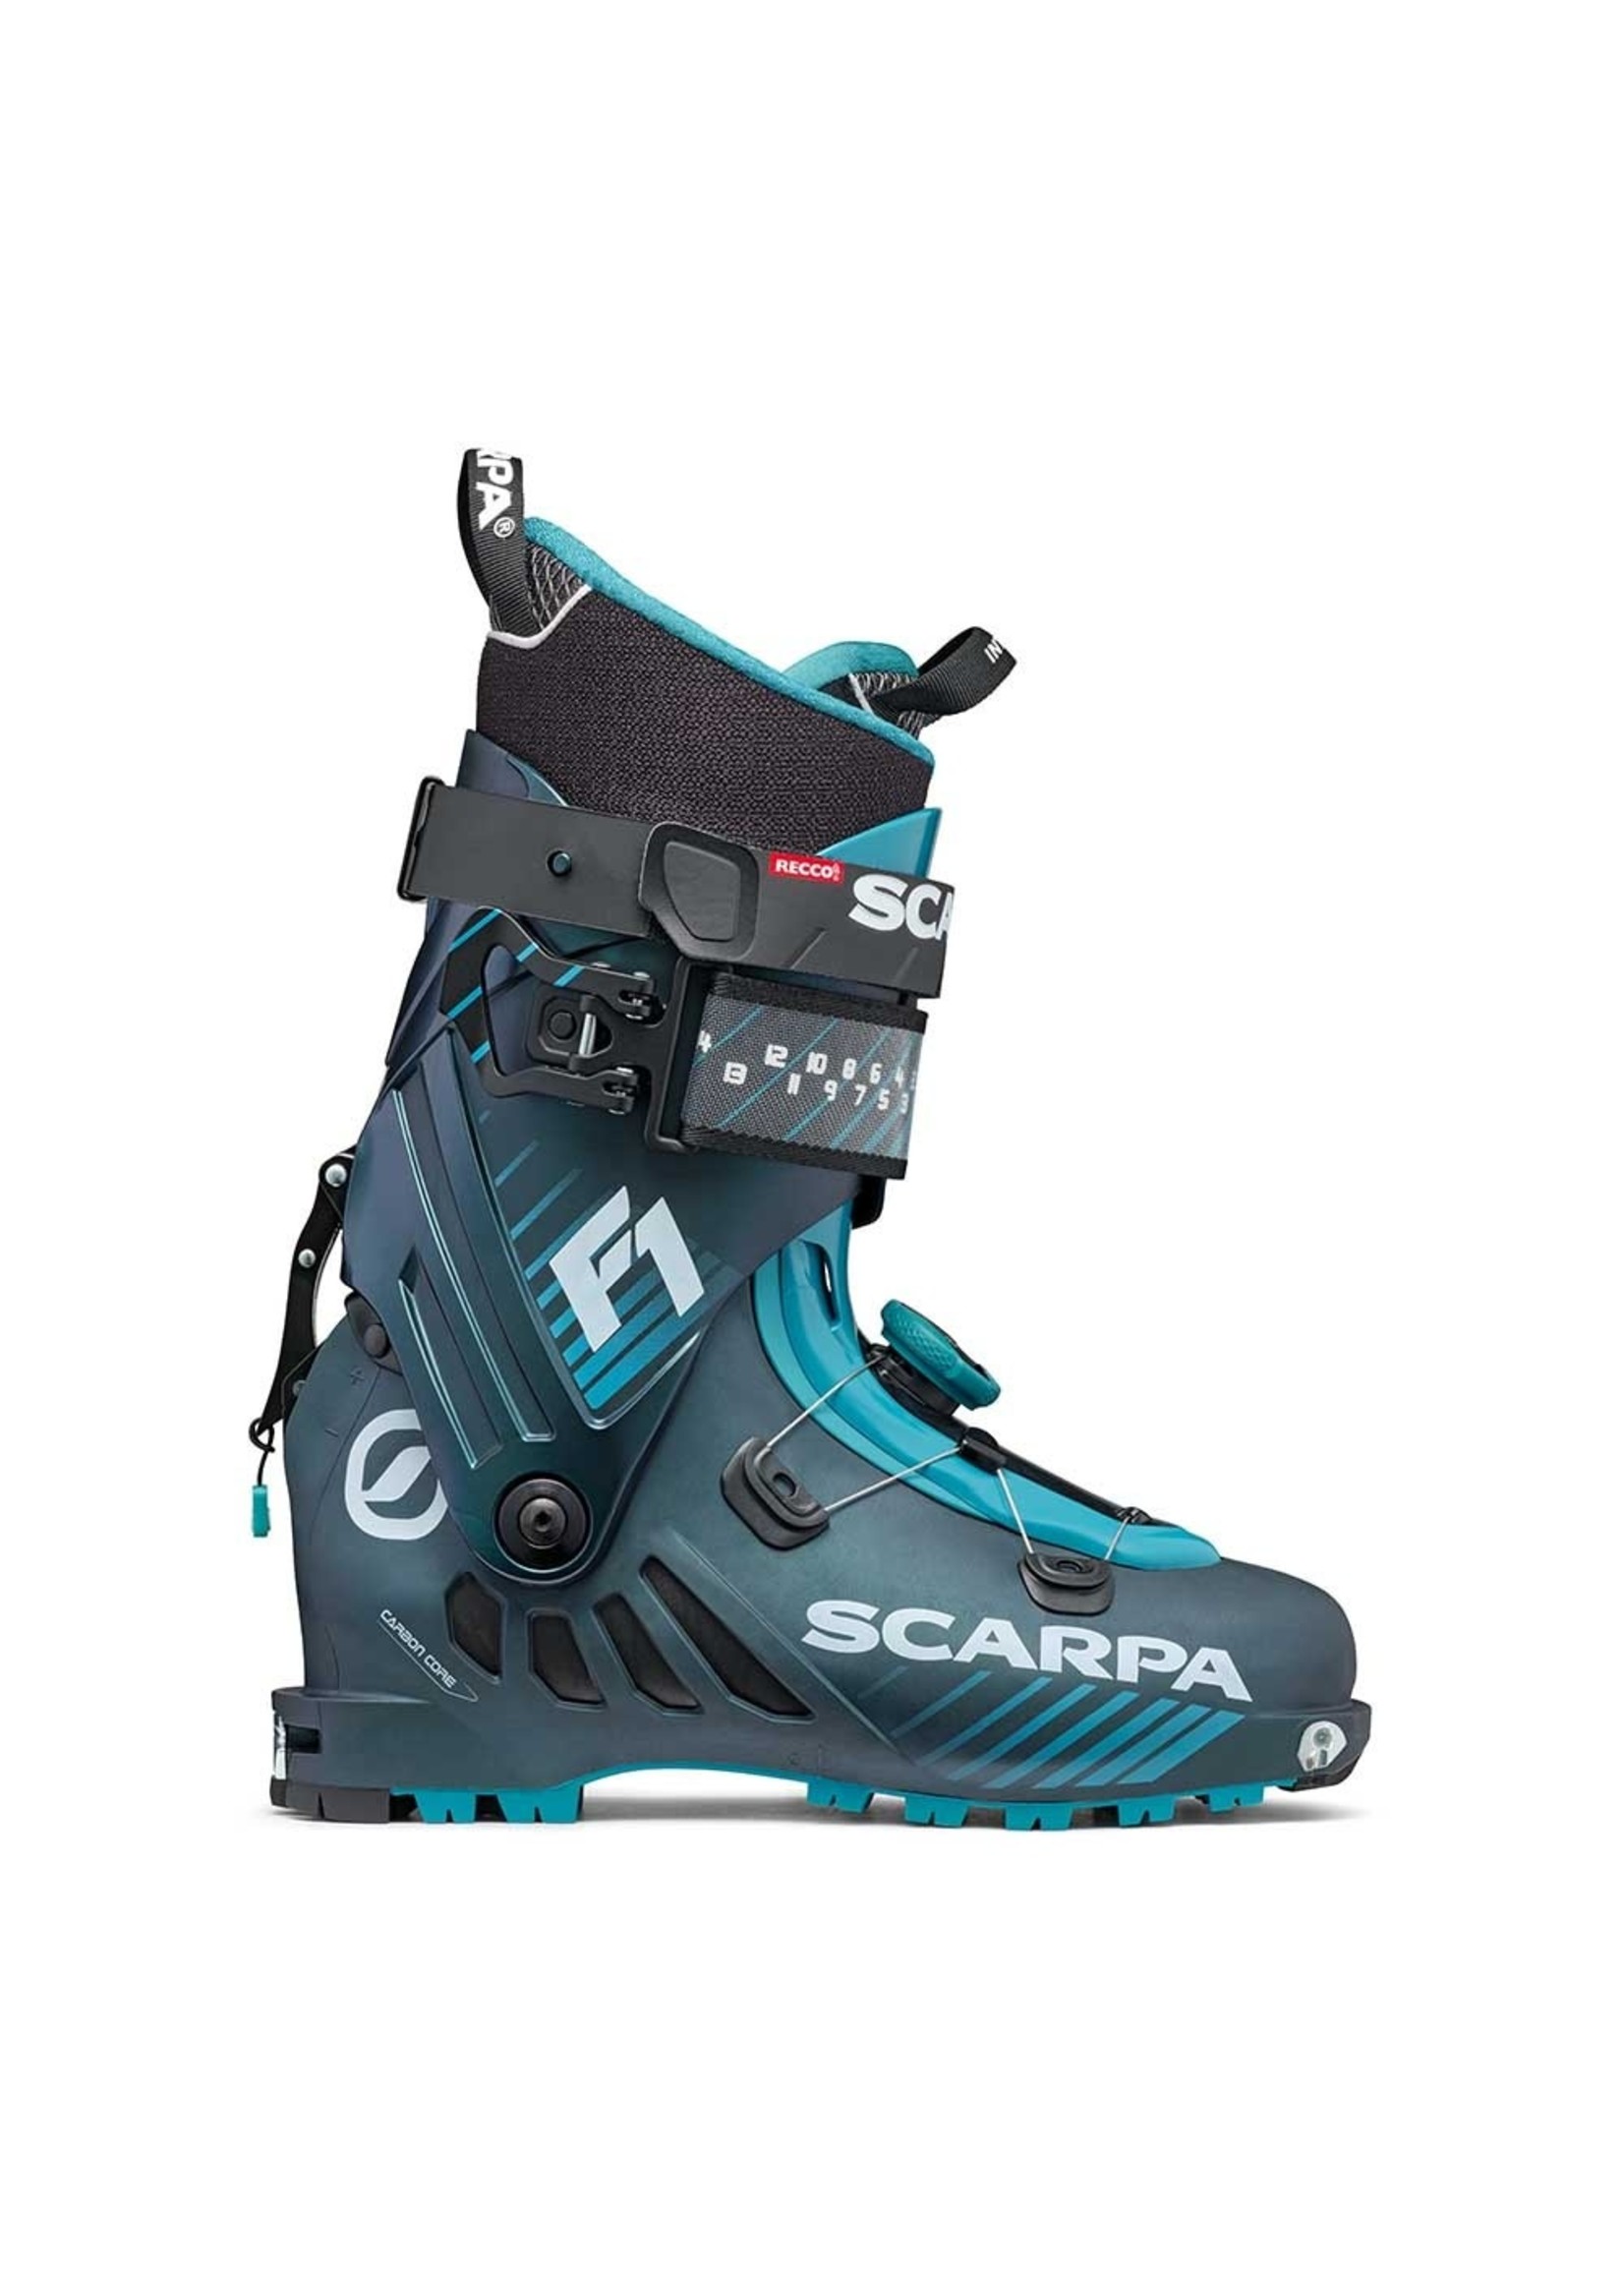 Scarpa Scarpa F1 Ski Boot - Women